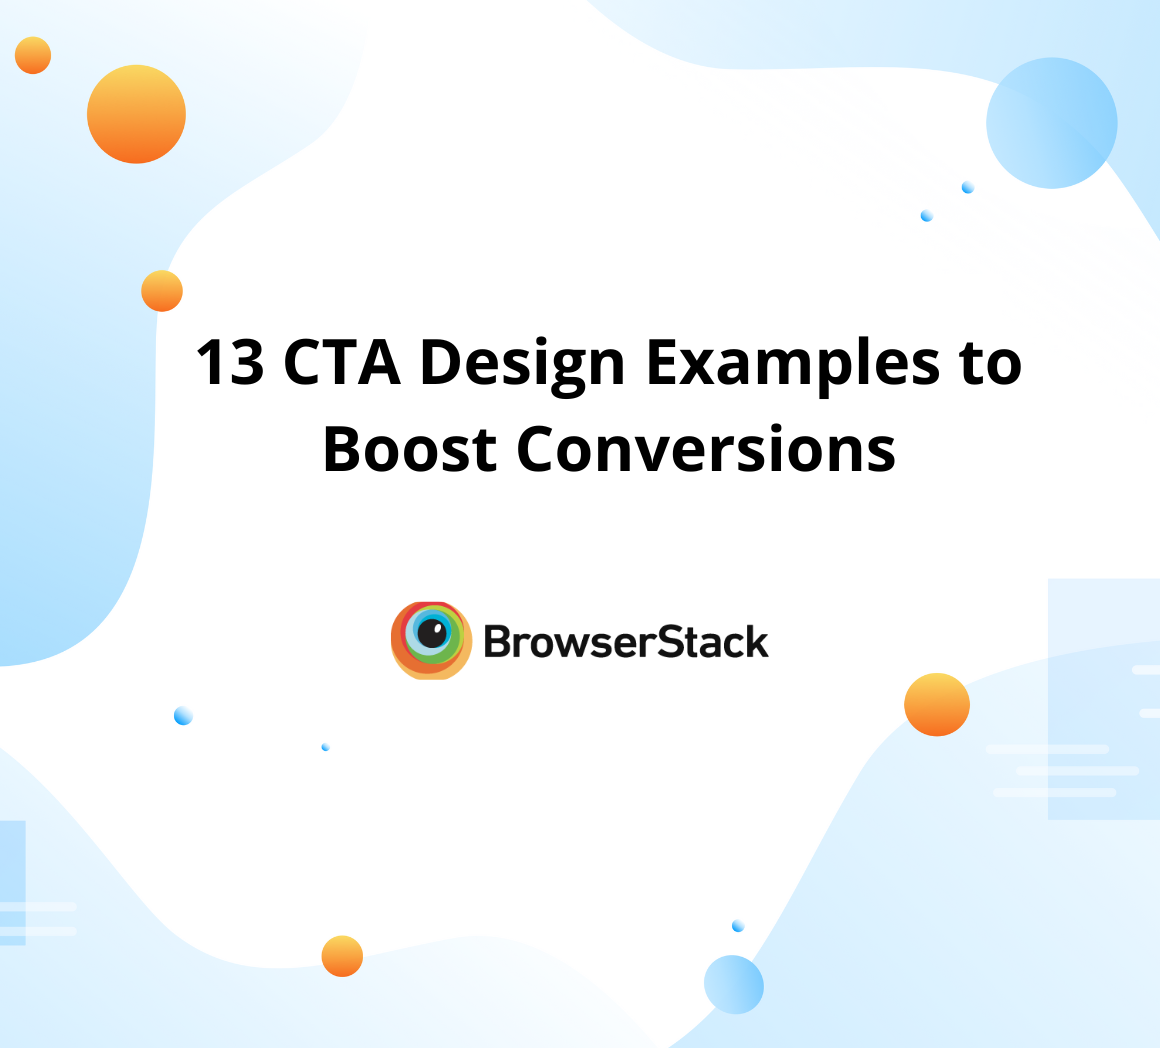 13 CTA Design Examples to Boost Conversions